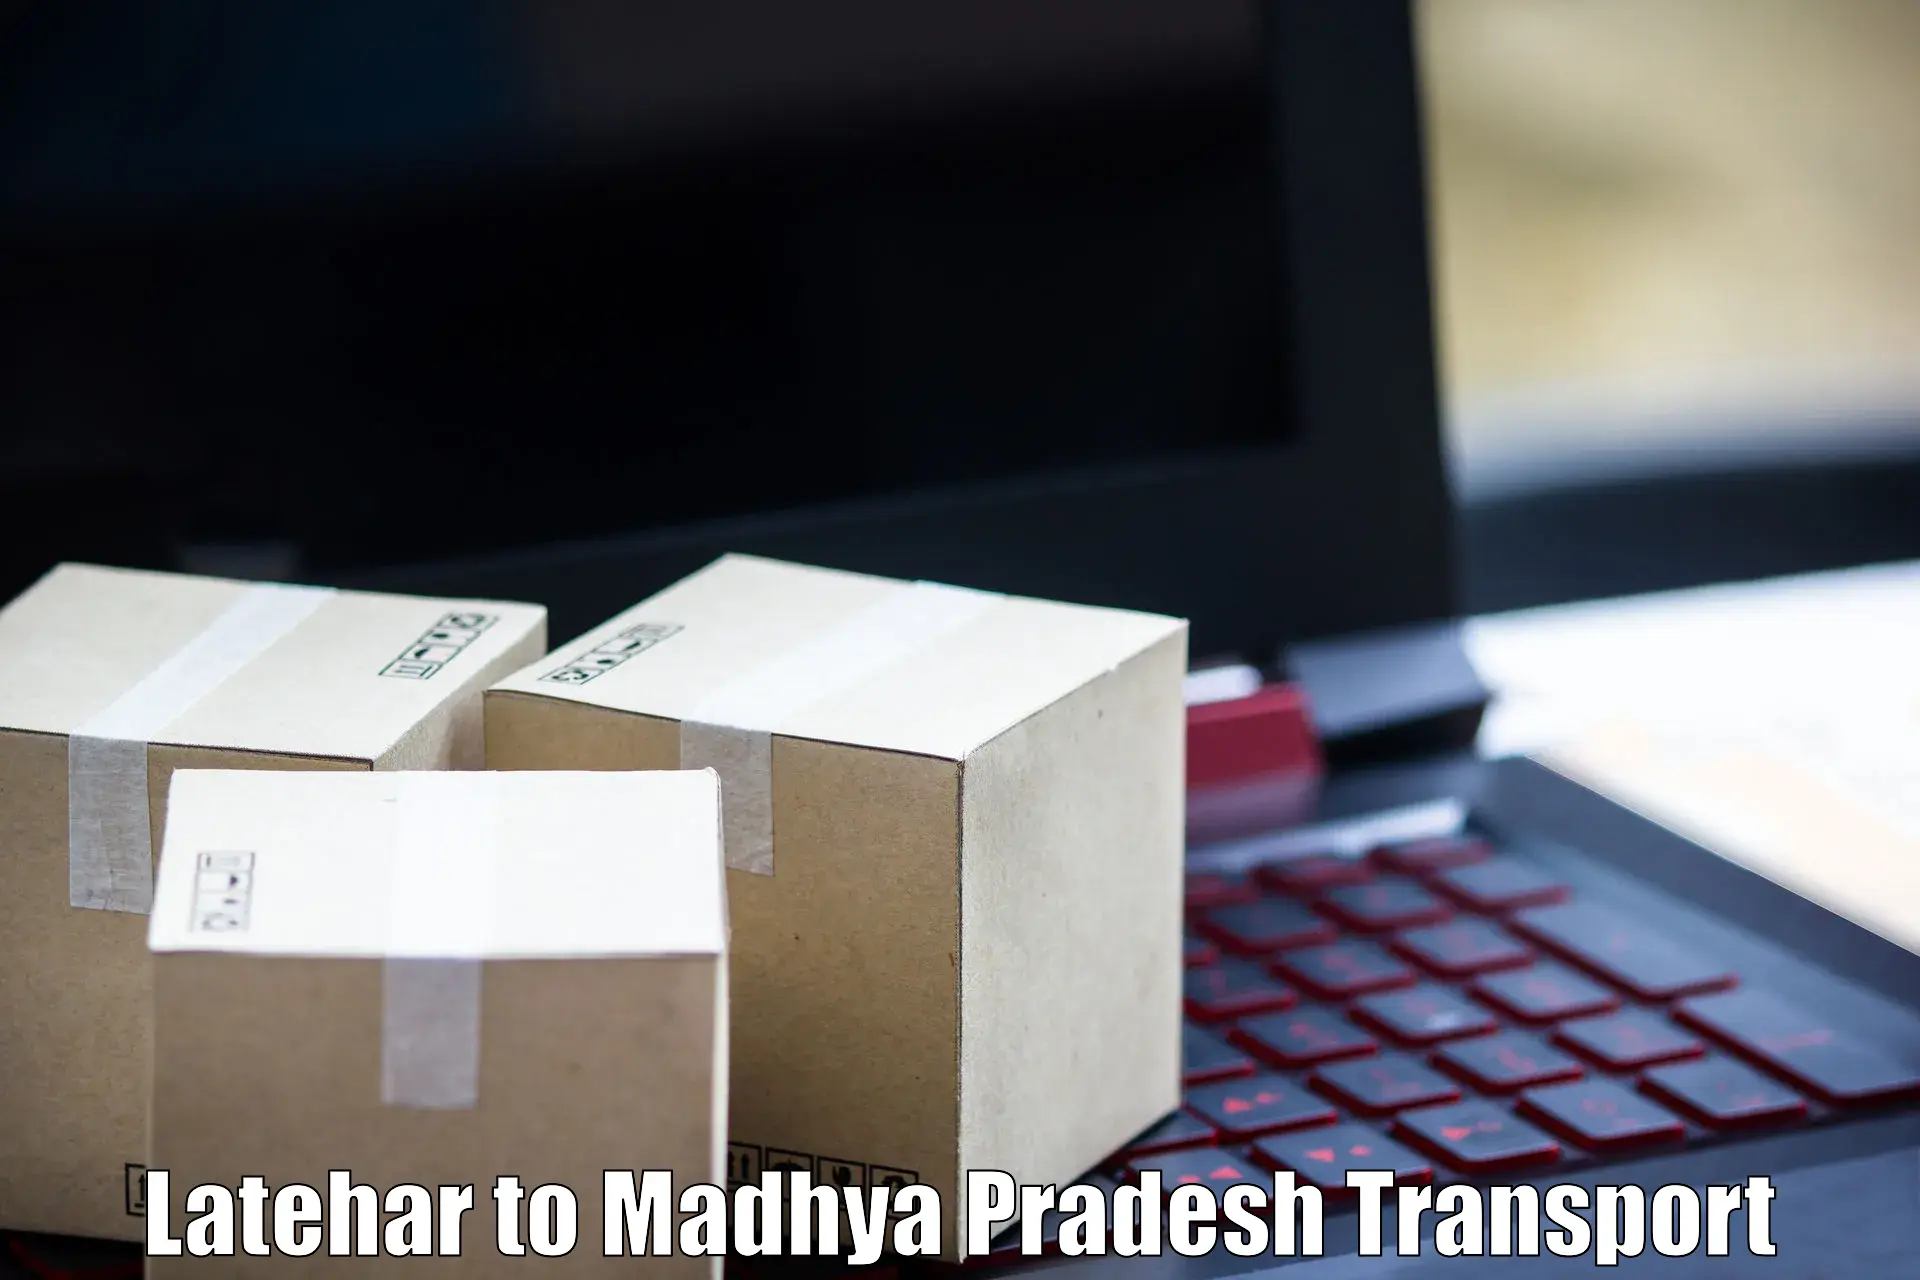 Online transport service Latehar to Mandla